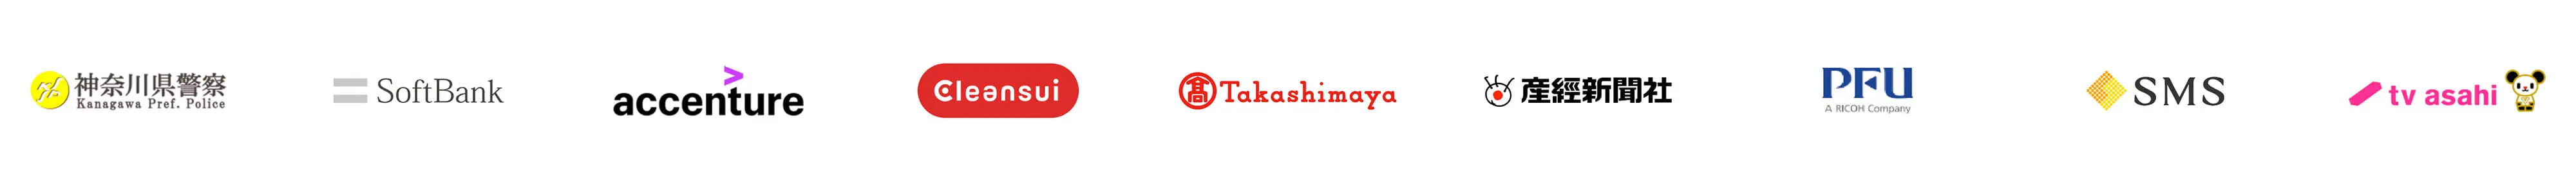 神奈川県警察 SoftBank accenture cleansui Takashimaya 産経新聞社 PFU SMS tv asahi